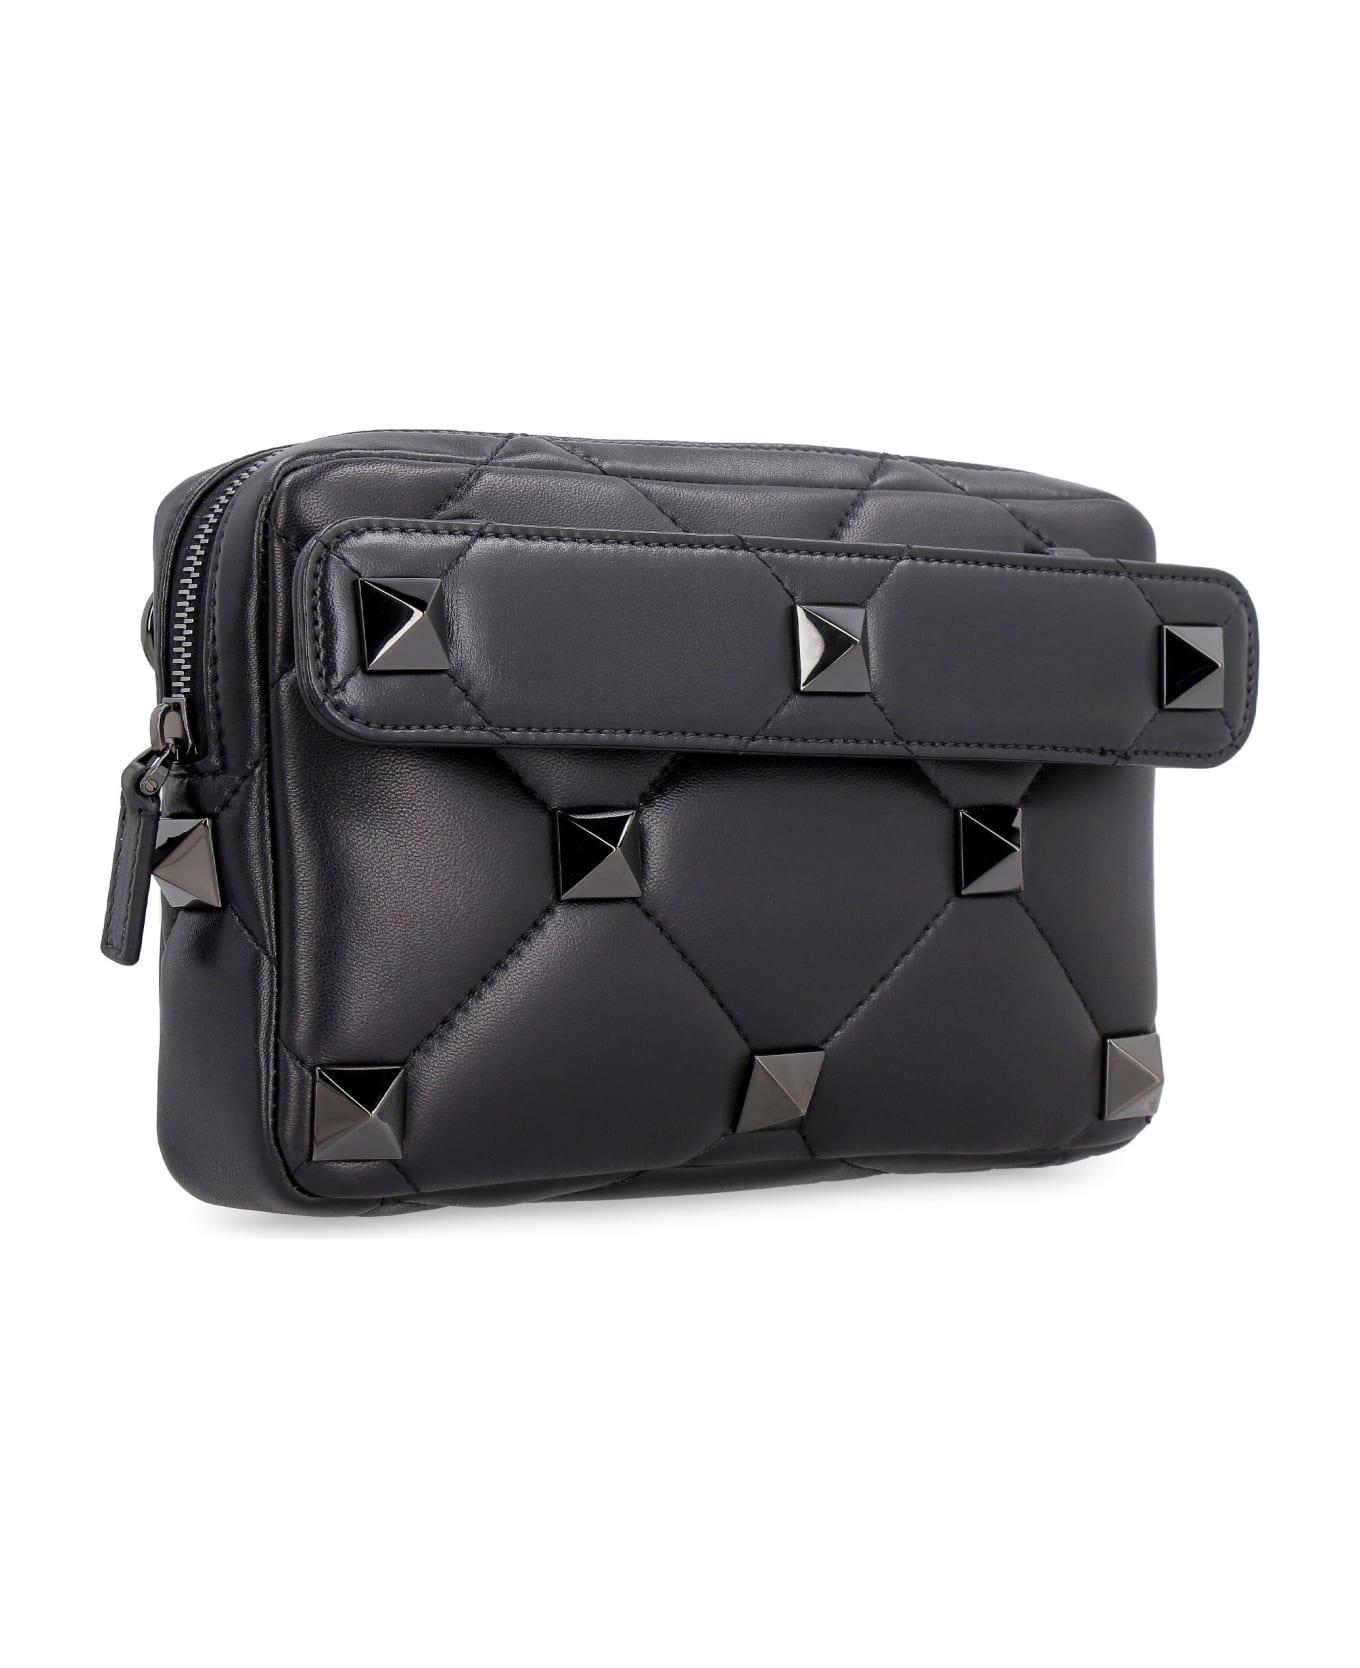 Valentino Garavani Roman Stud Quilted Leather Shoulder Bag - Nero